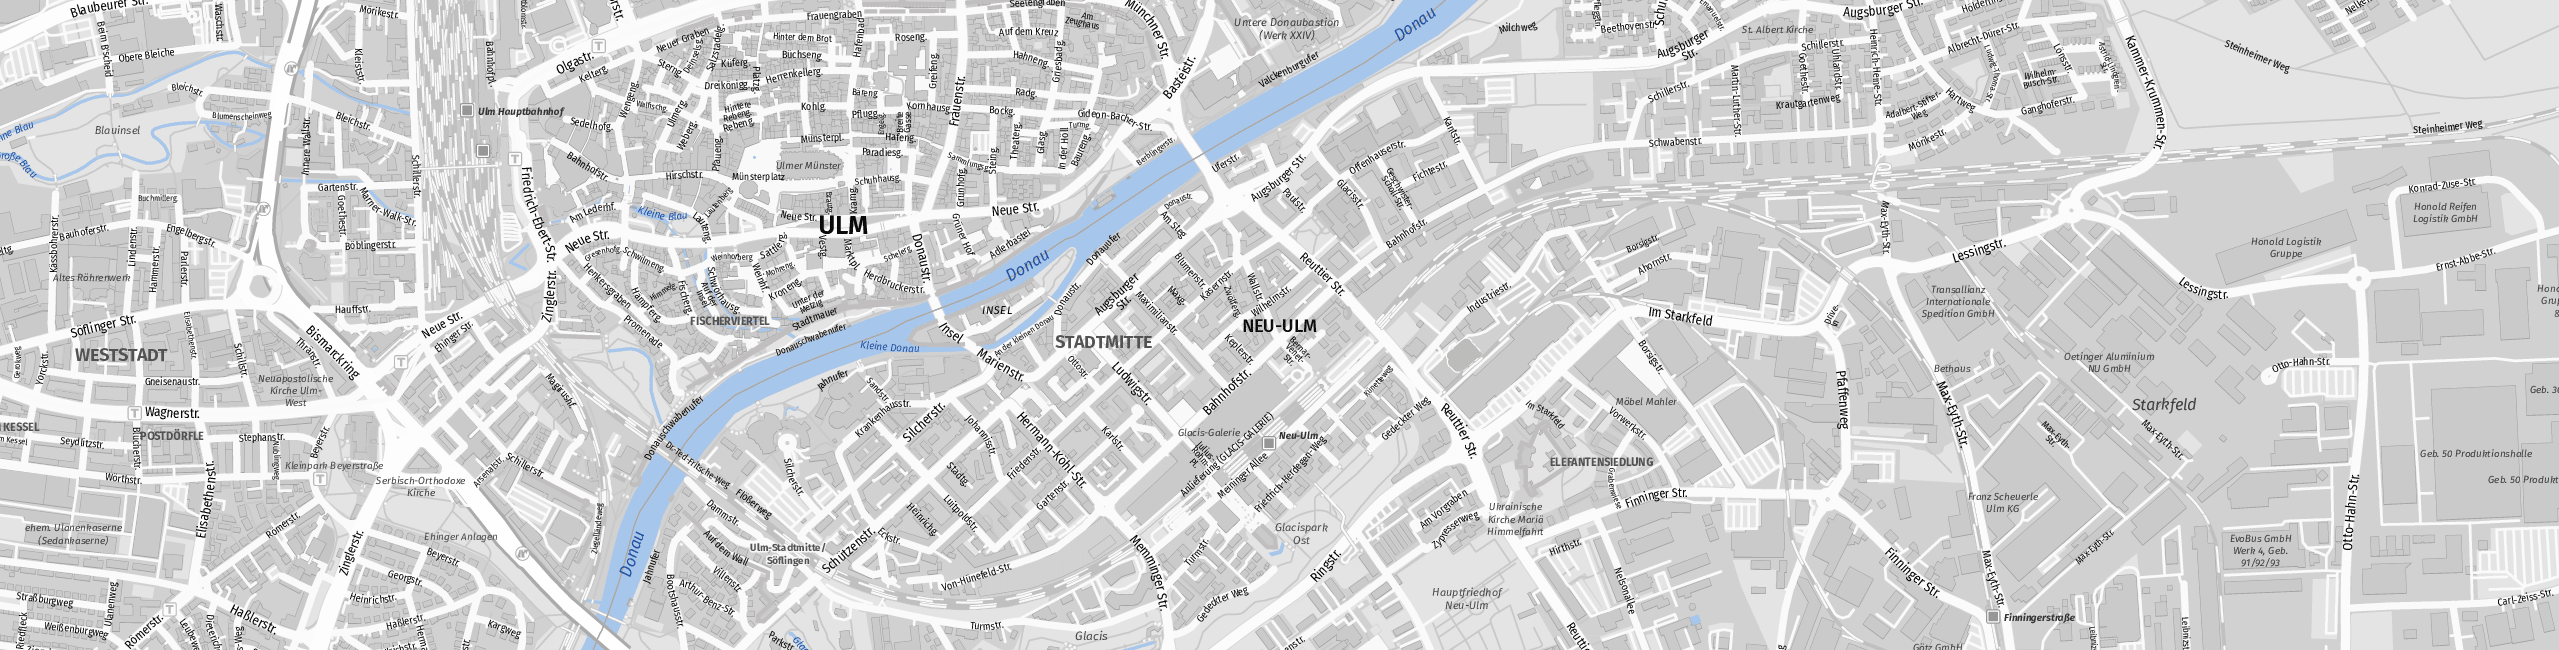 Stadtplan Neu-Ulm zum Downloaden.